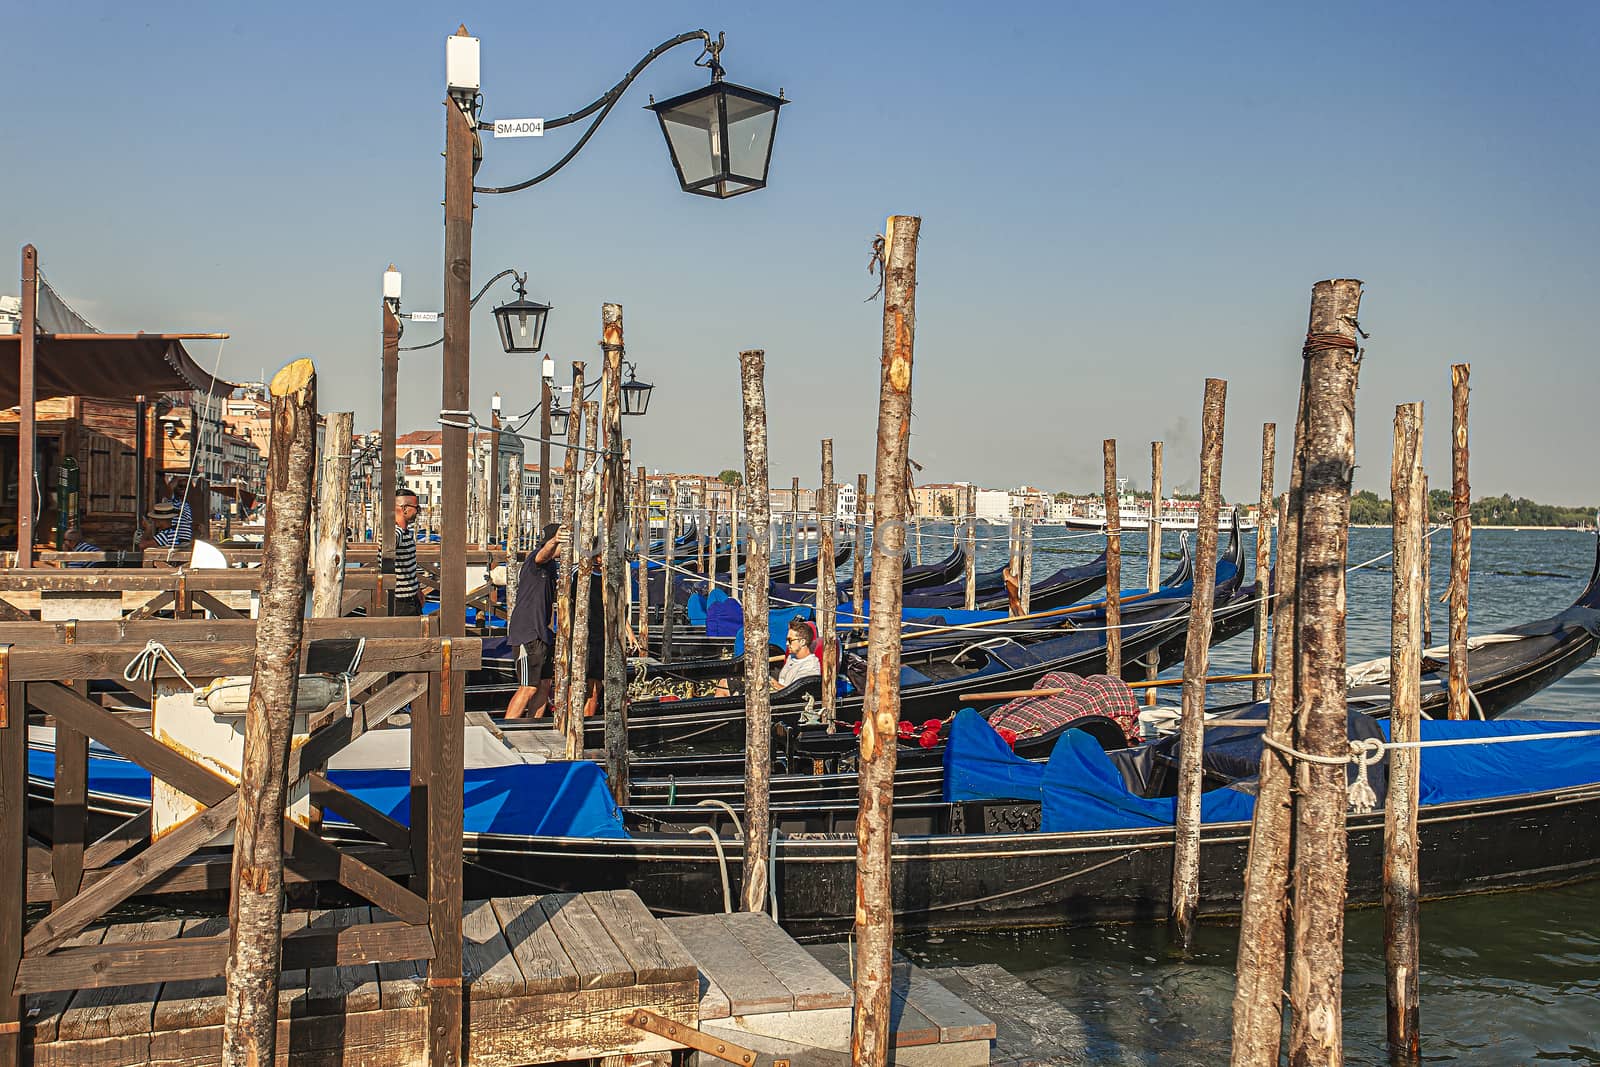 Gondolas moored in San Marco square in Venice 2 by pippocarlot